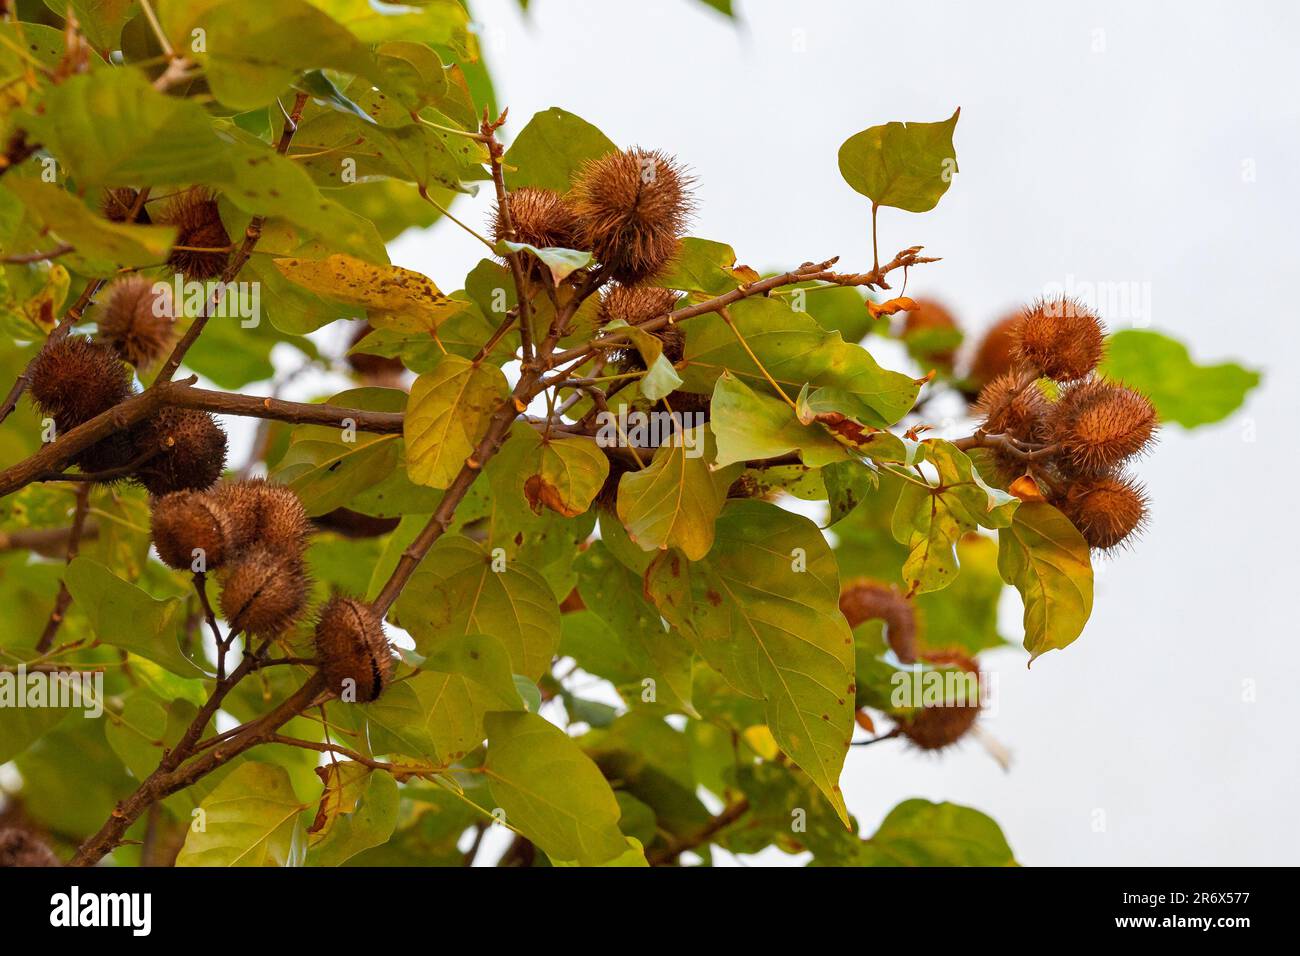 Annato plant also knows as urucum. This is a reddish-colored condiment derived from the Bixa Orellana tree. Gastronomy. Medicine.Urucum fruit Stock Photo